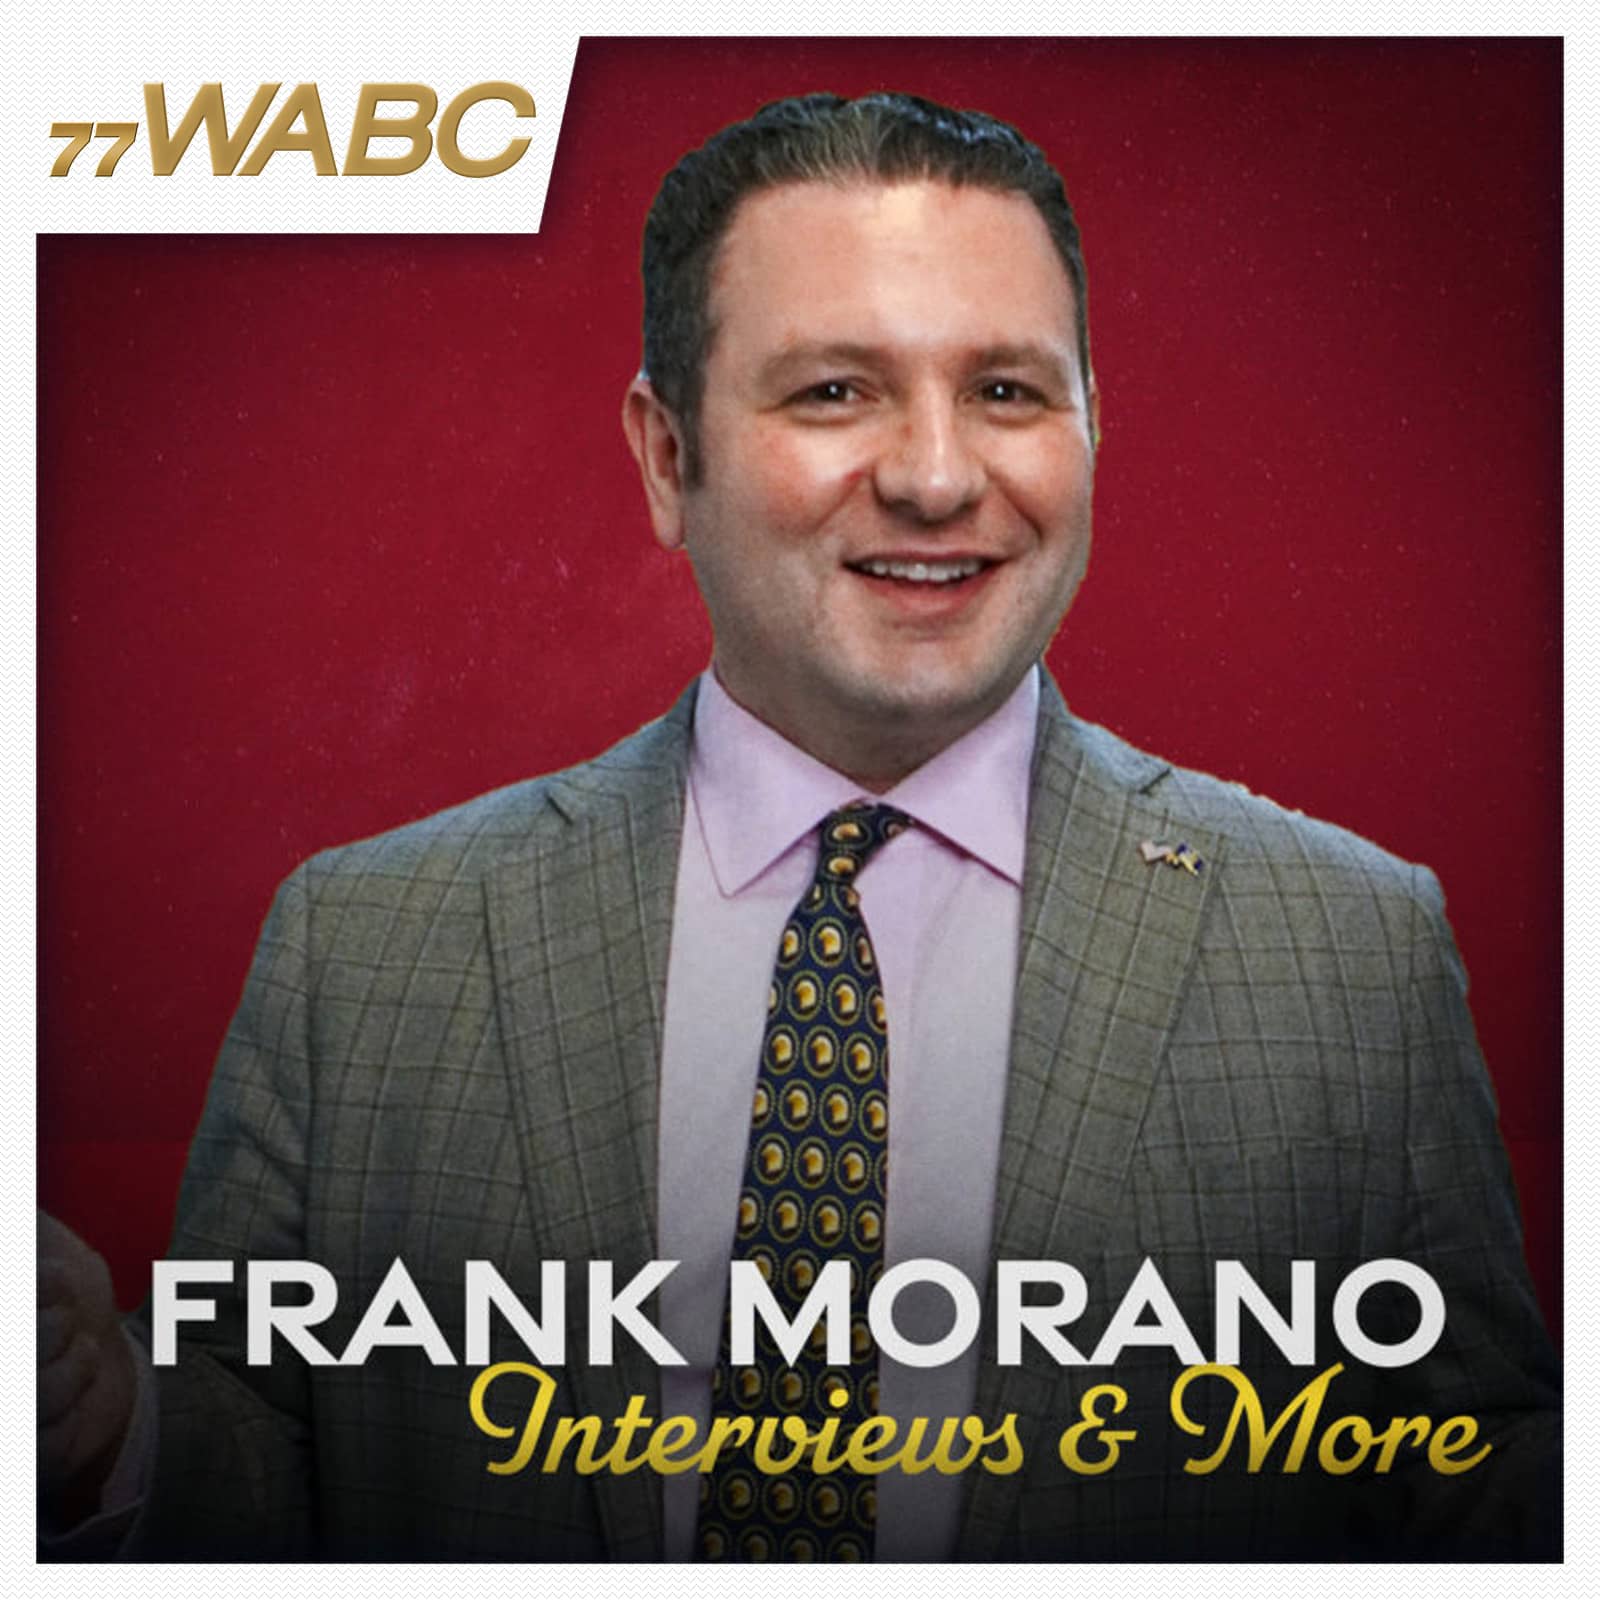 frank-morano-interviews-and-more-podcast-new-logo-89